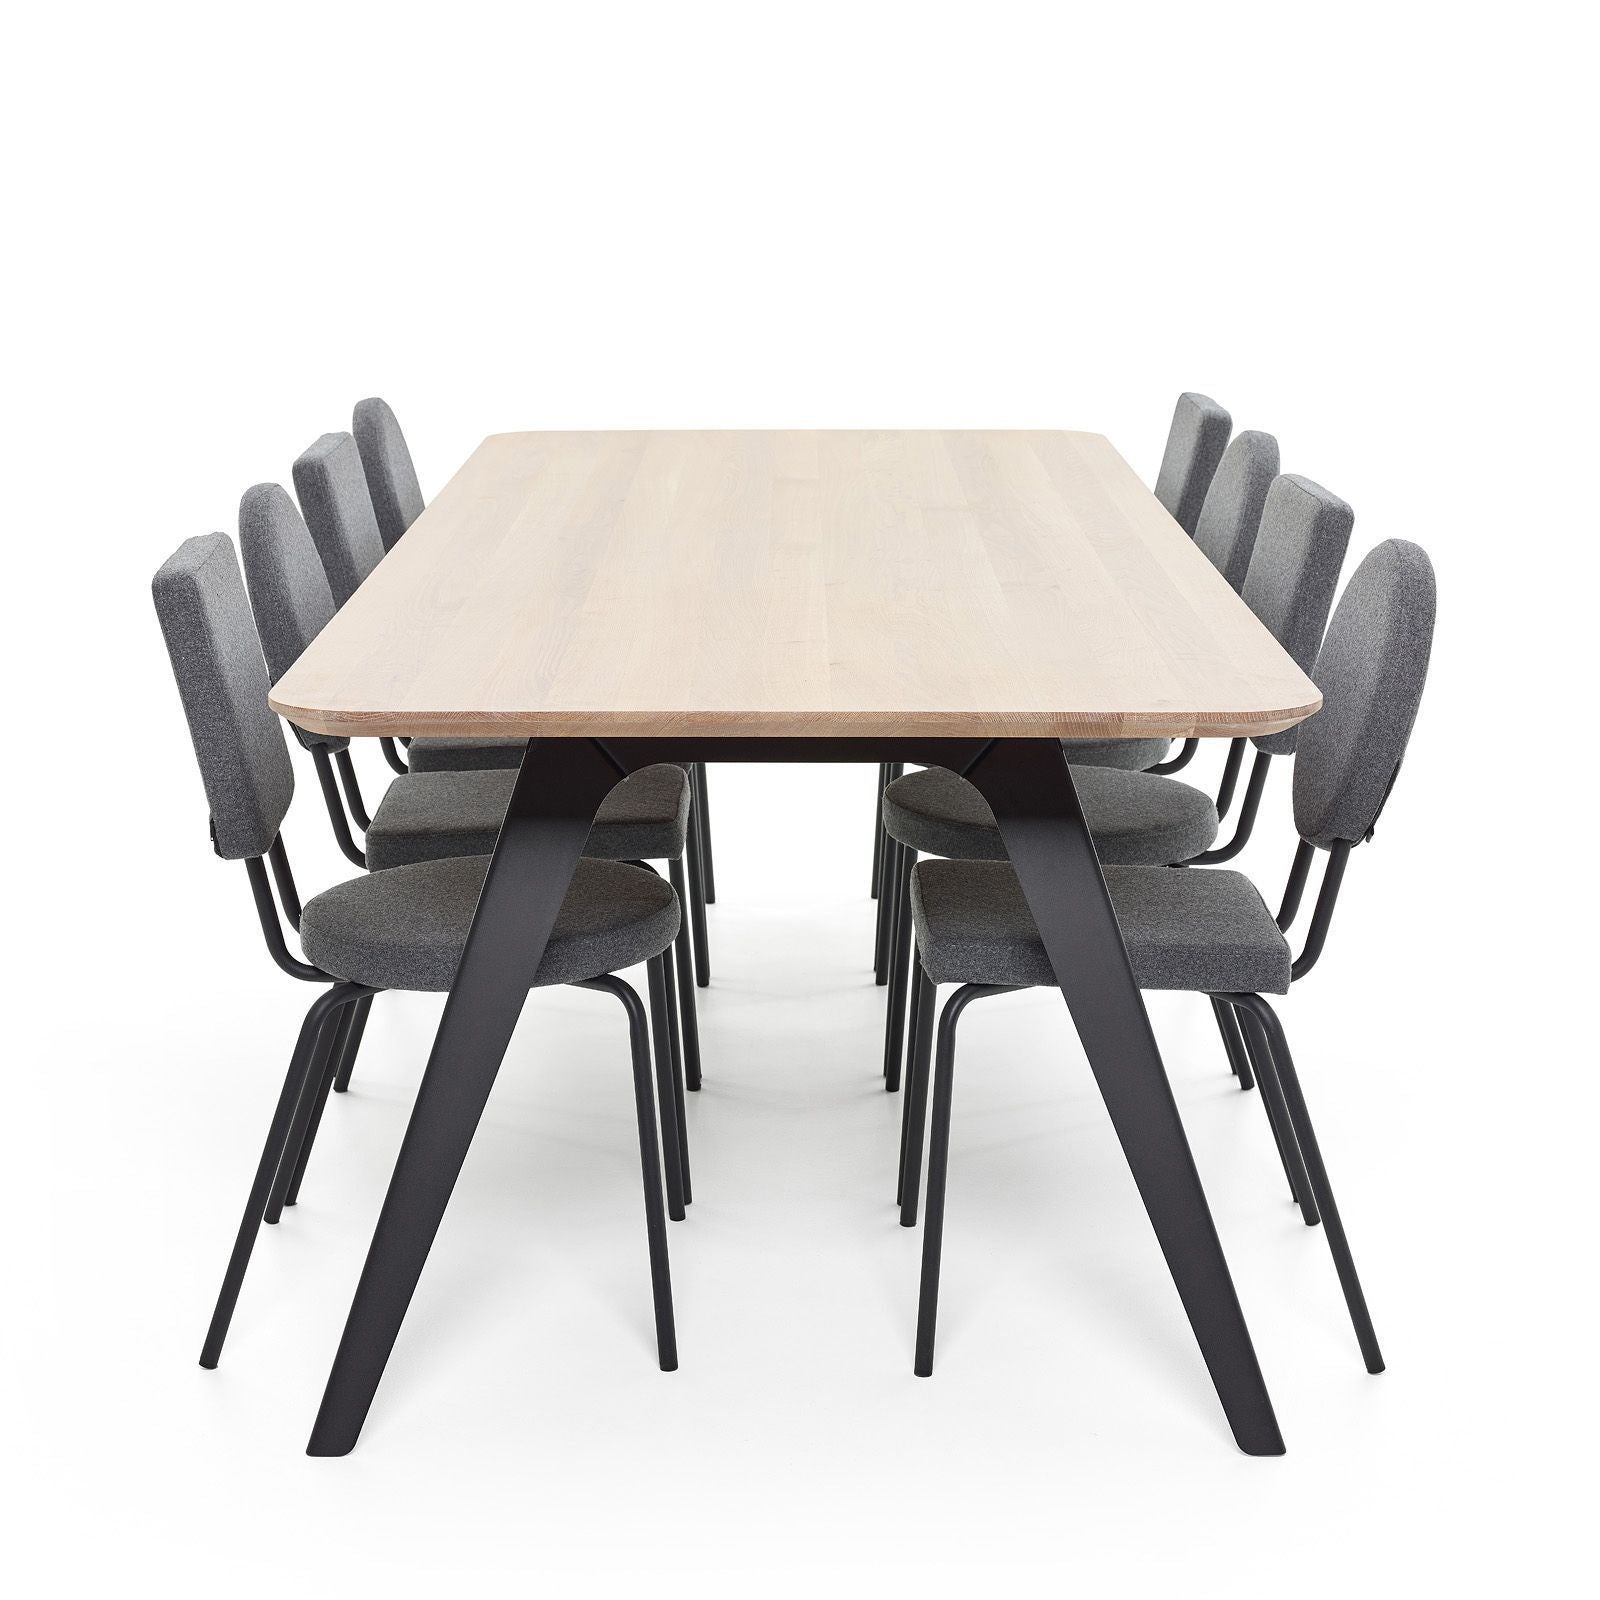 Puik Fold Dining Table 240x100cm, Black / Naturel